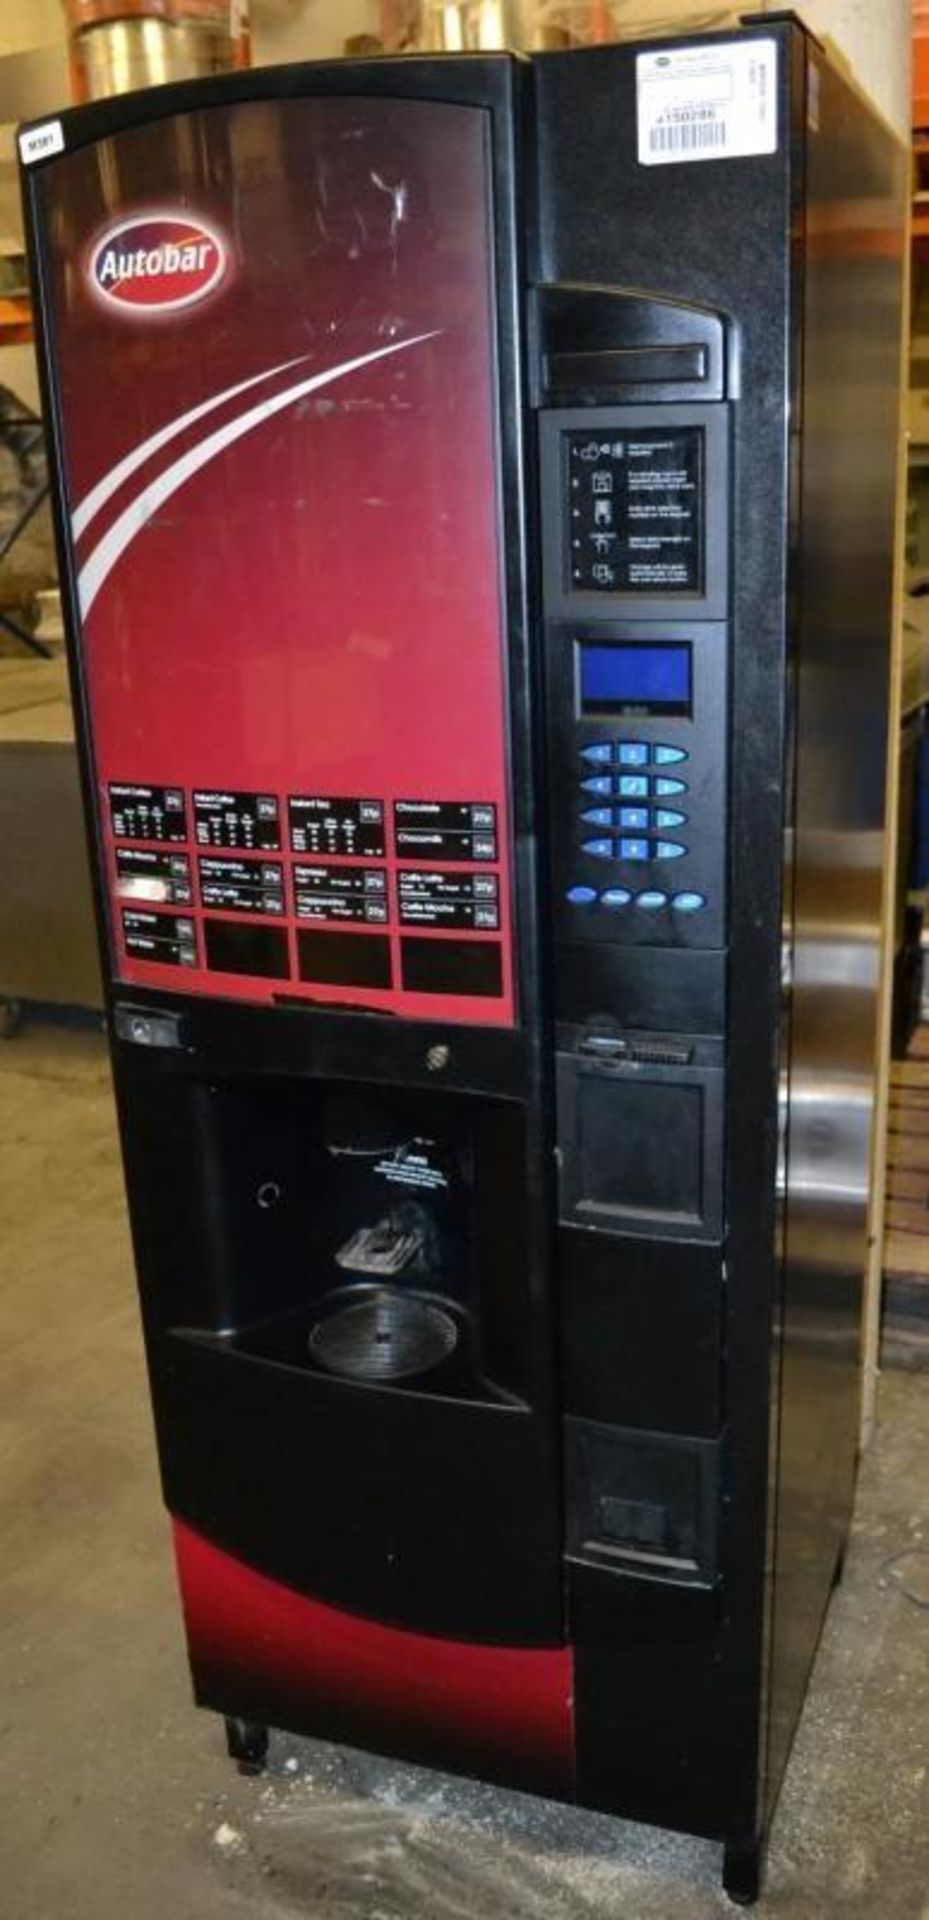 1 x Crane "Evolution" Hot Beverage Drinks Vending Machine With Keys - Year: 2009 - Recently Taken Fr - Image 2 of 14